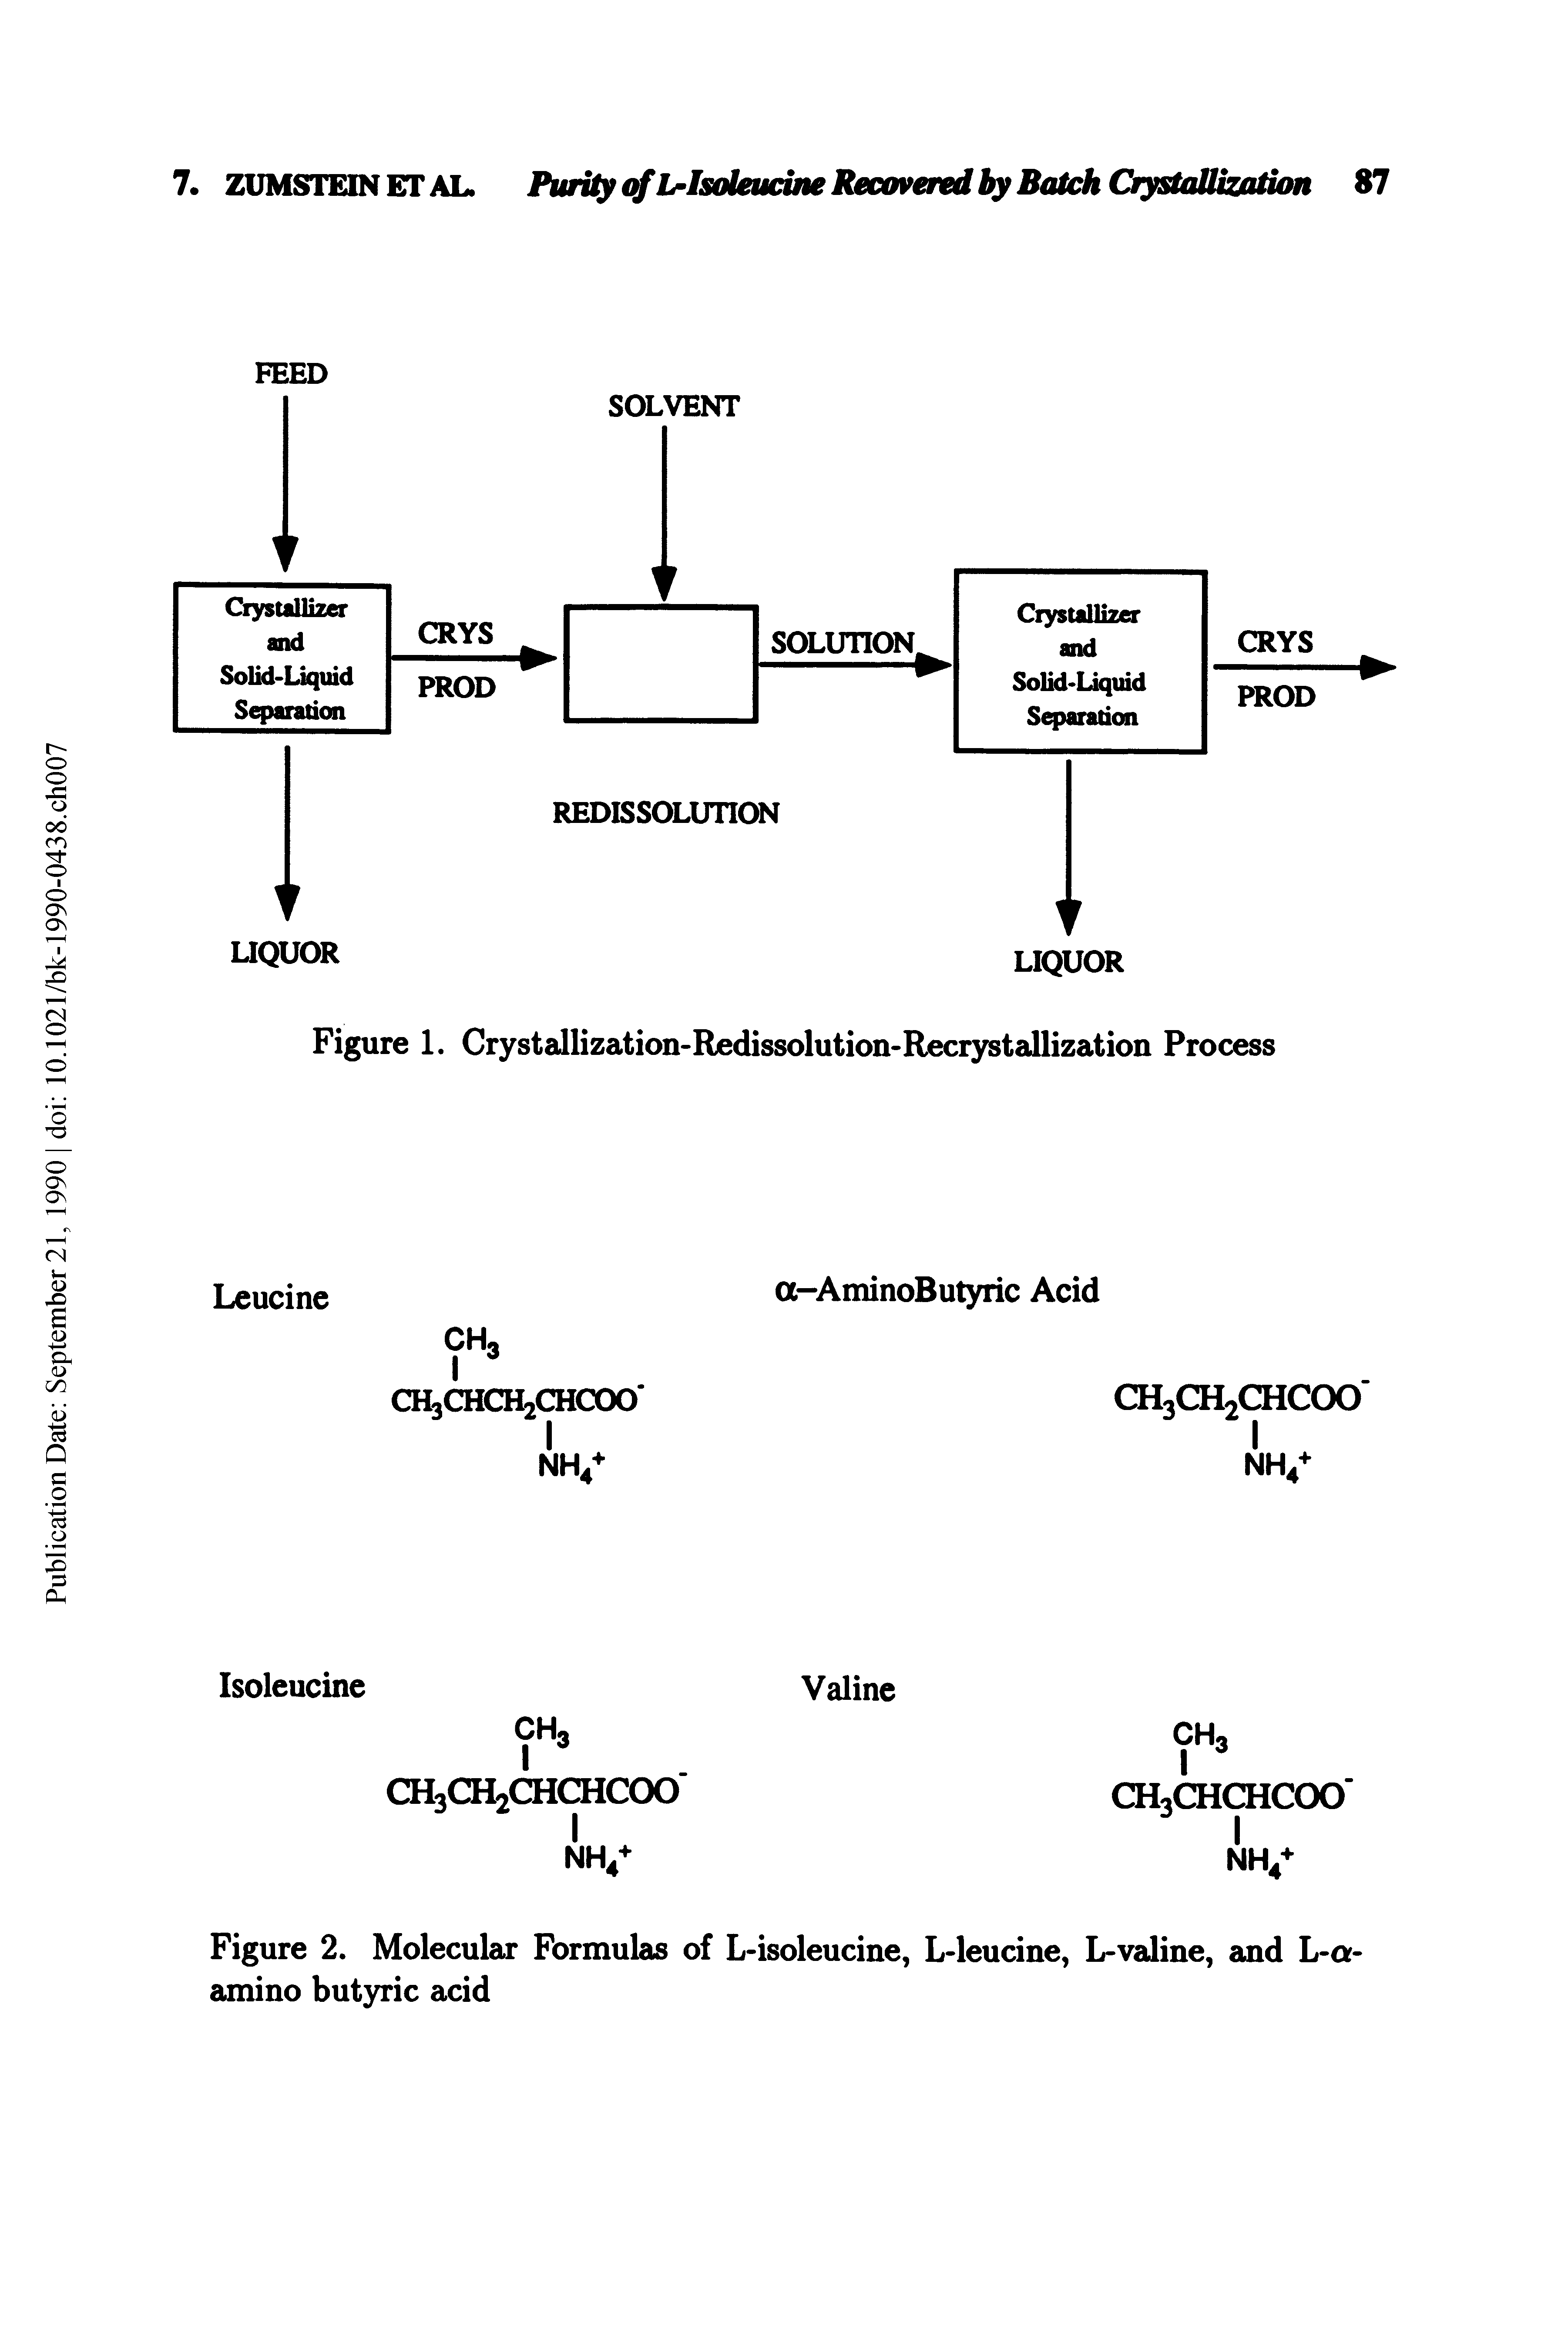 Figure 2. Molecular Formulas of L-isoleucine, L-leucine, L-valine, and L-a-amino butyric acid...